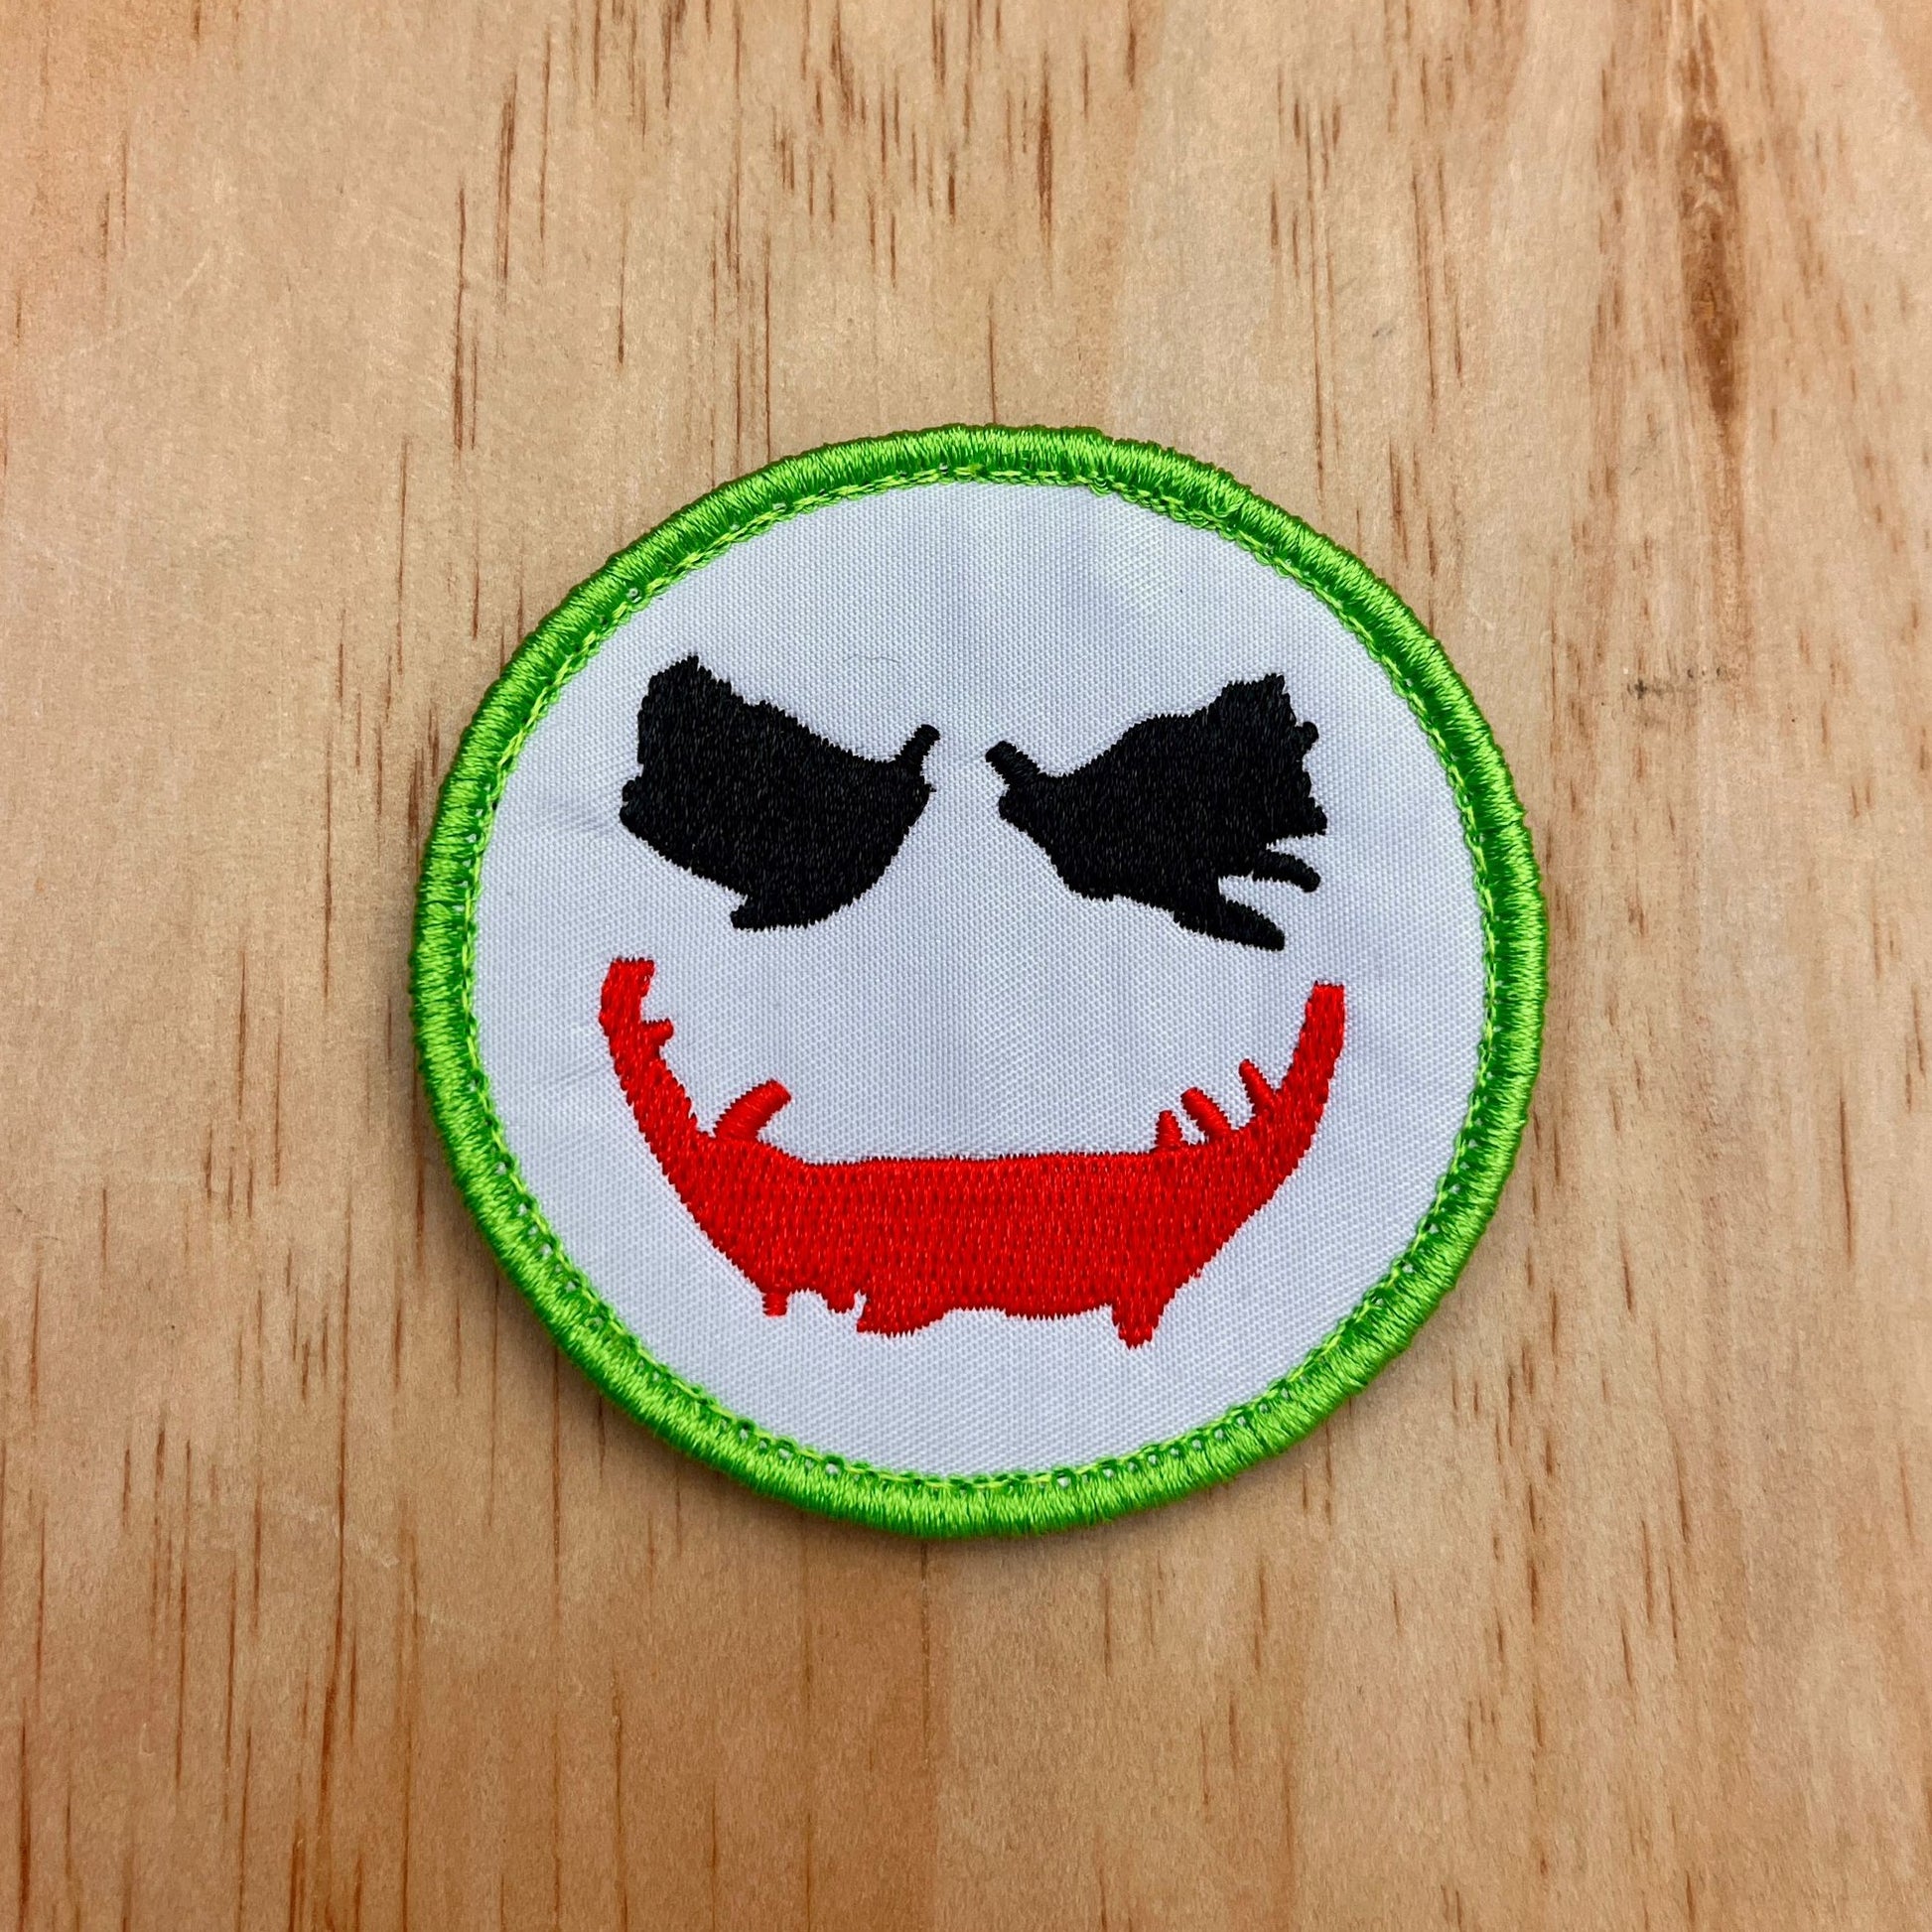 Joker patch